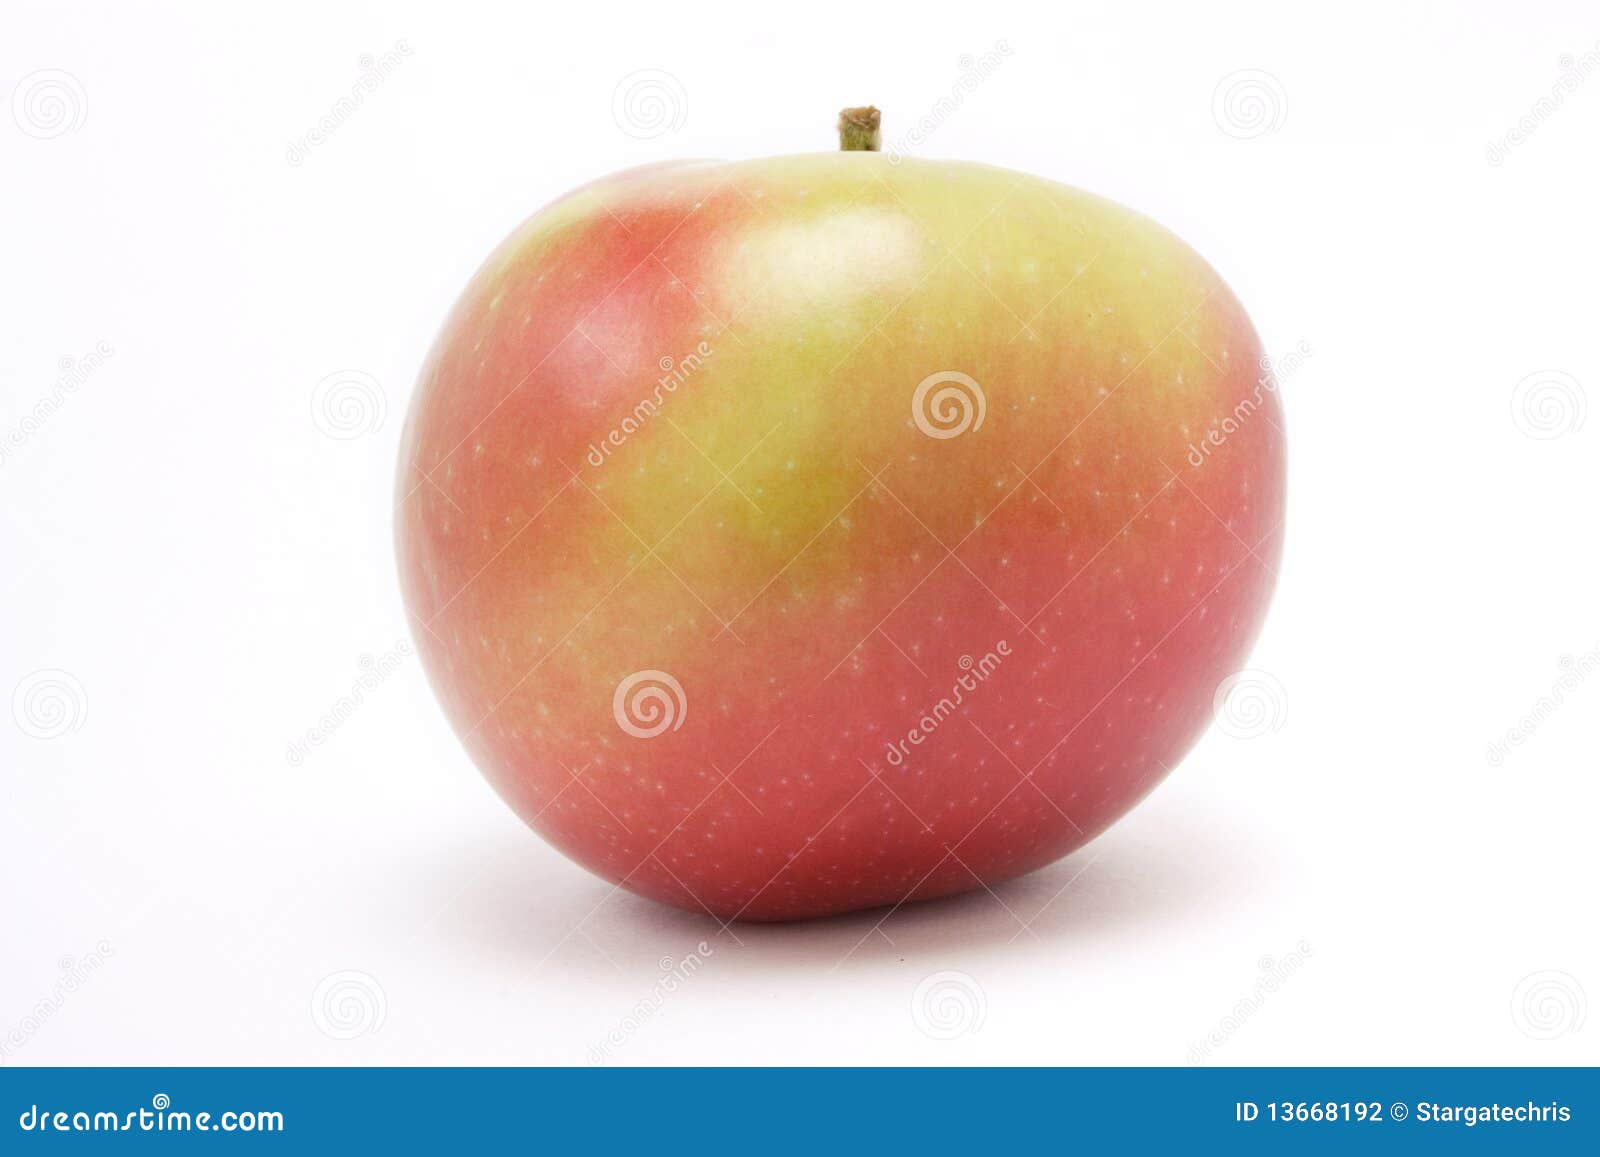 red macintosh apple